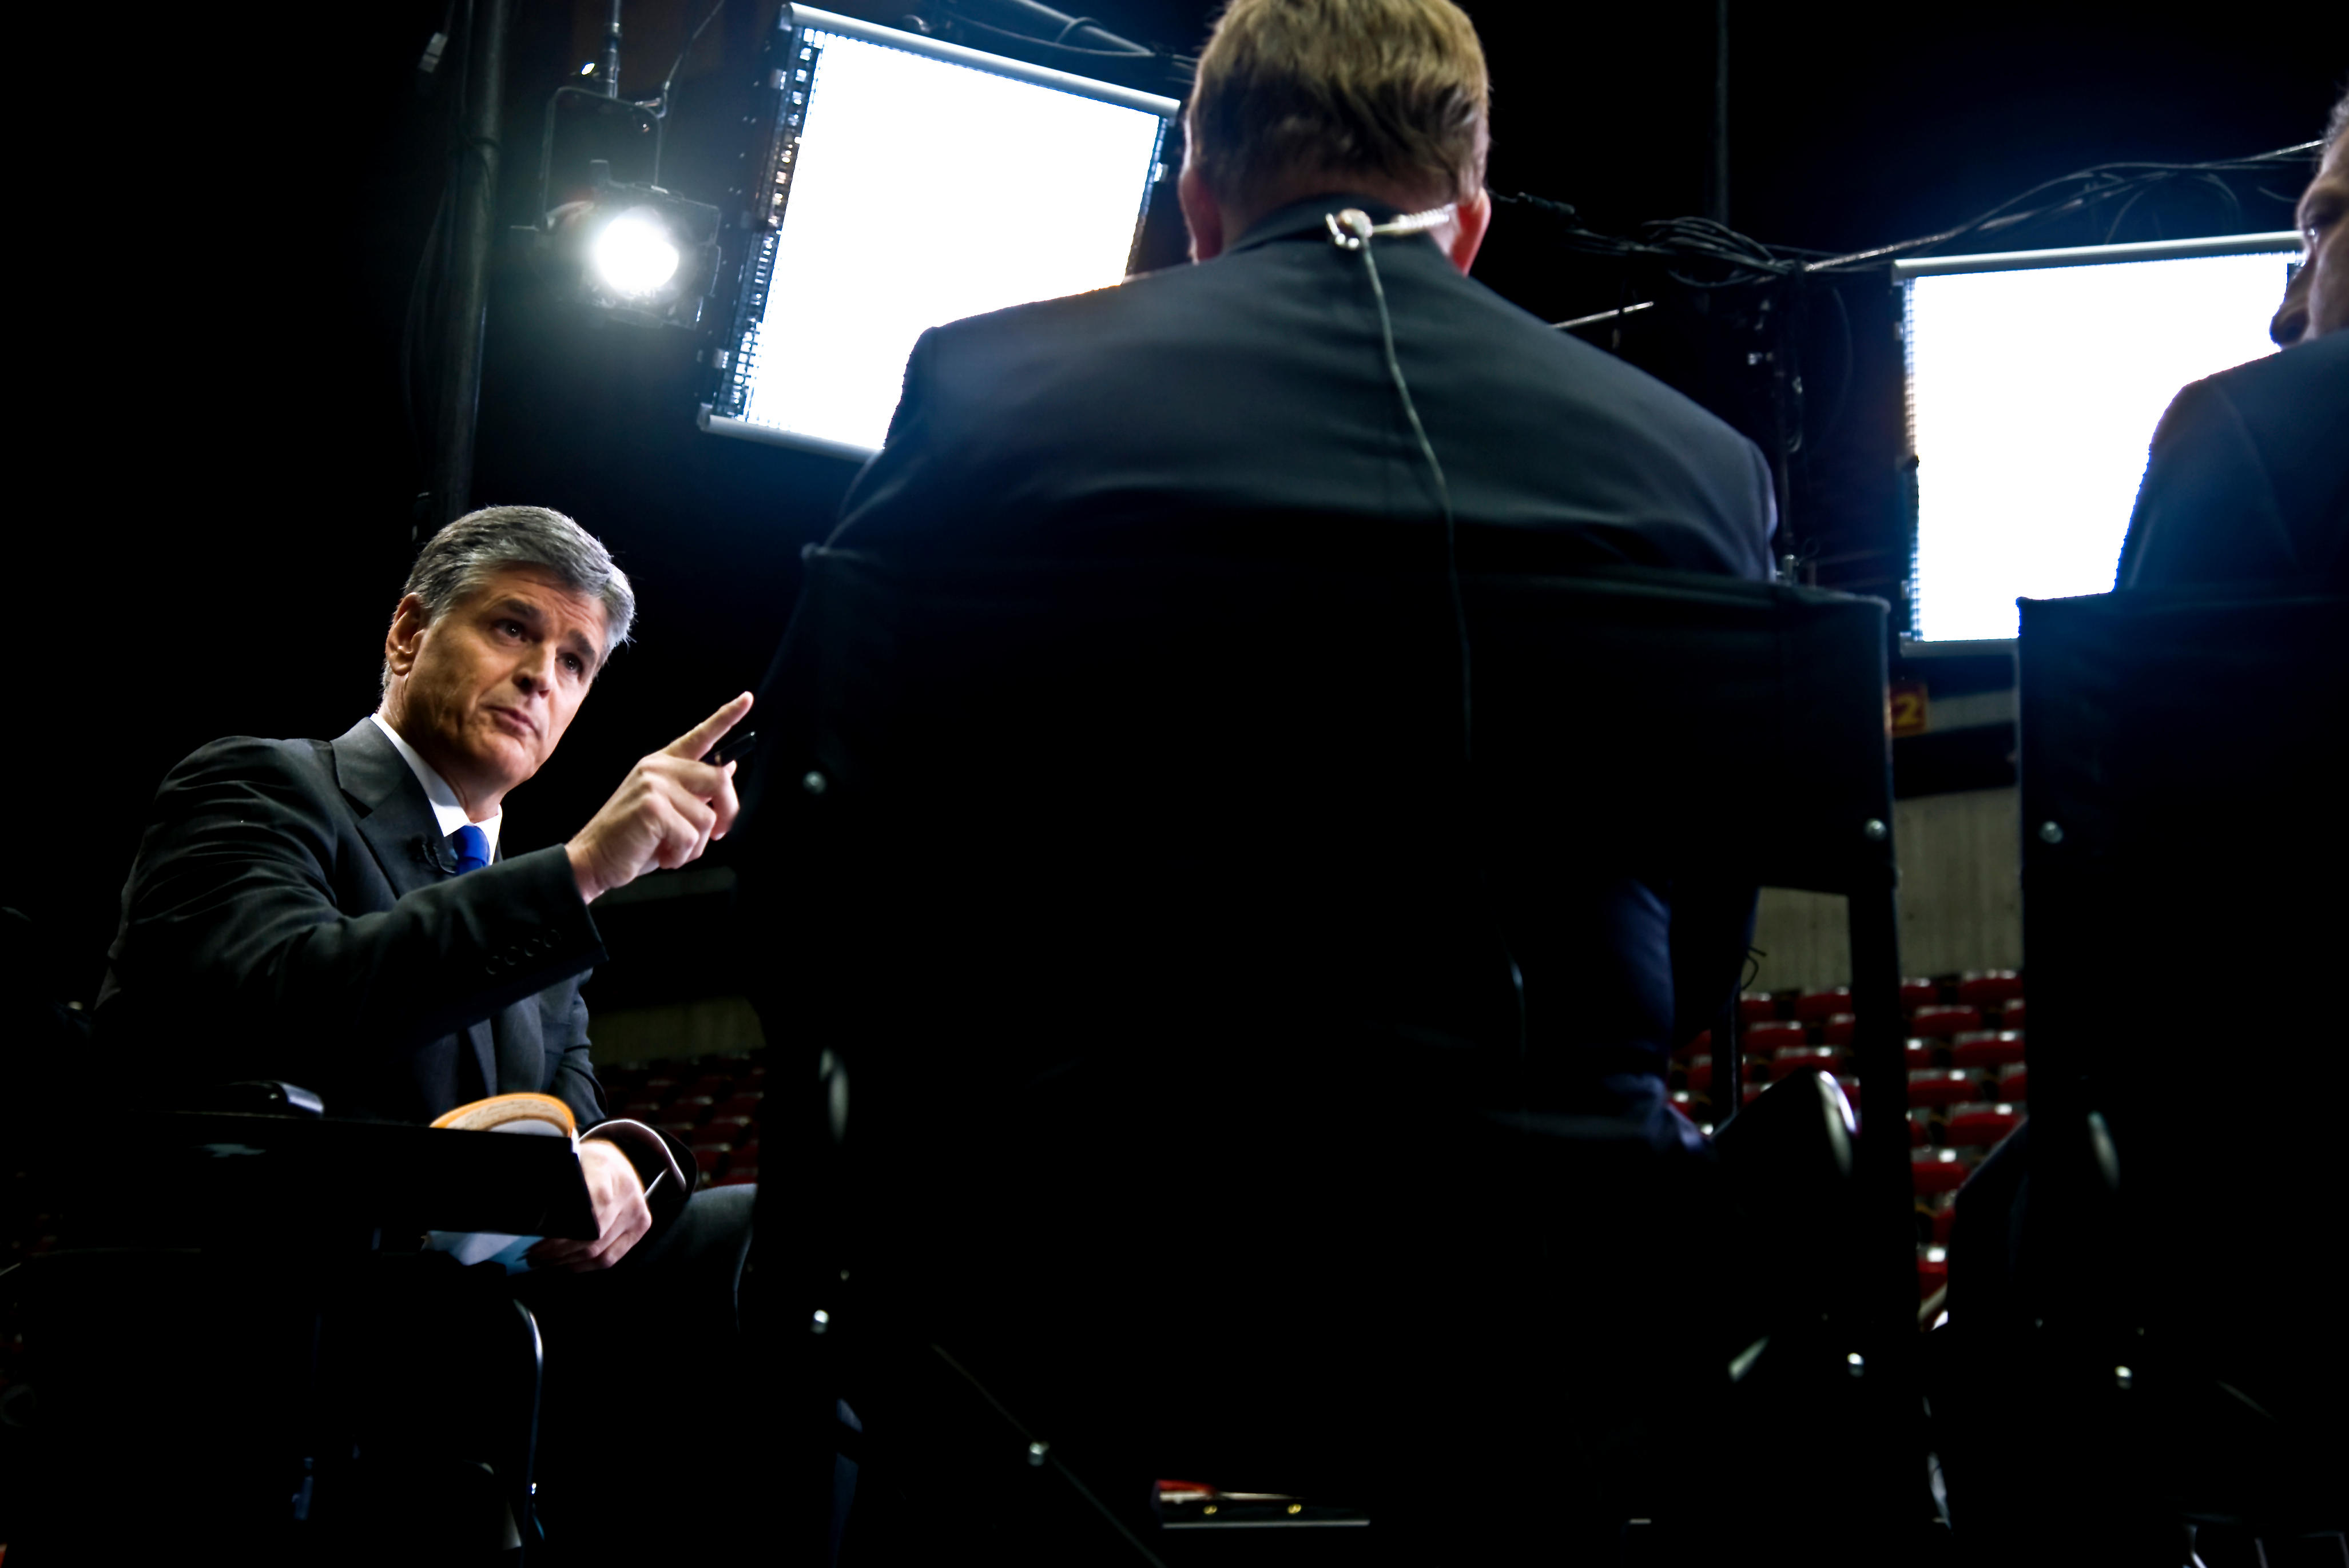 Sean Hannity on set at Fox News.